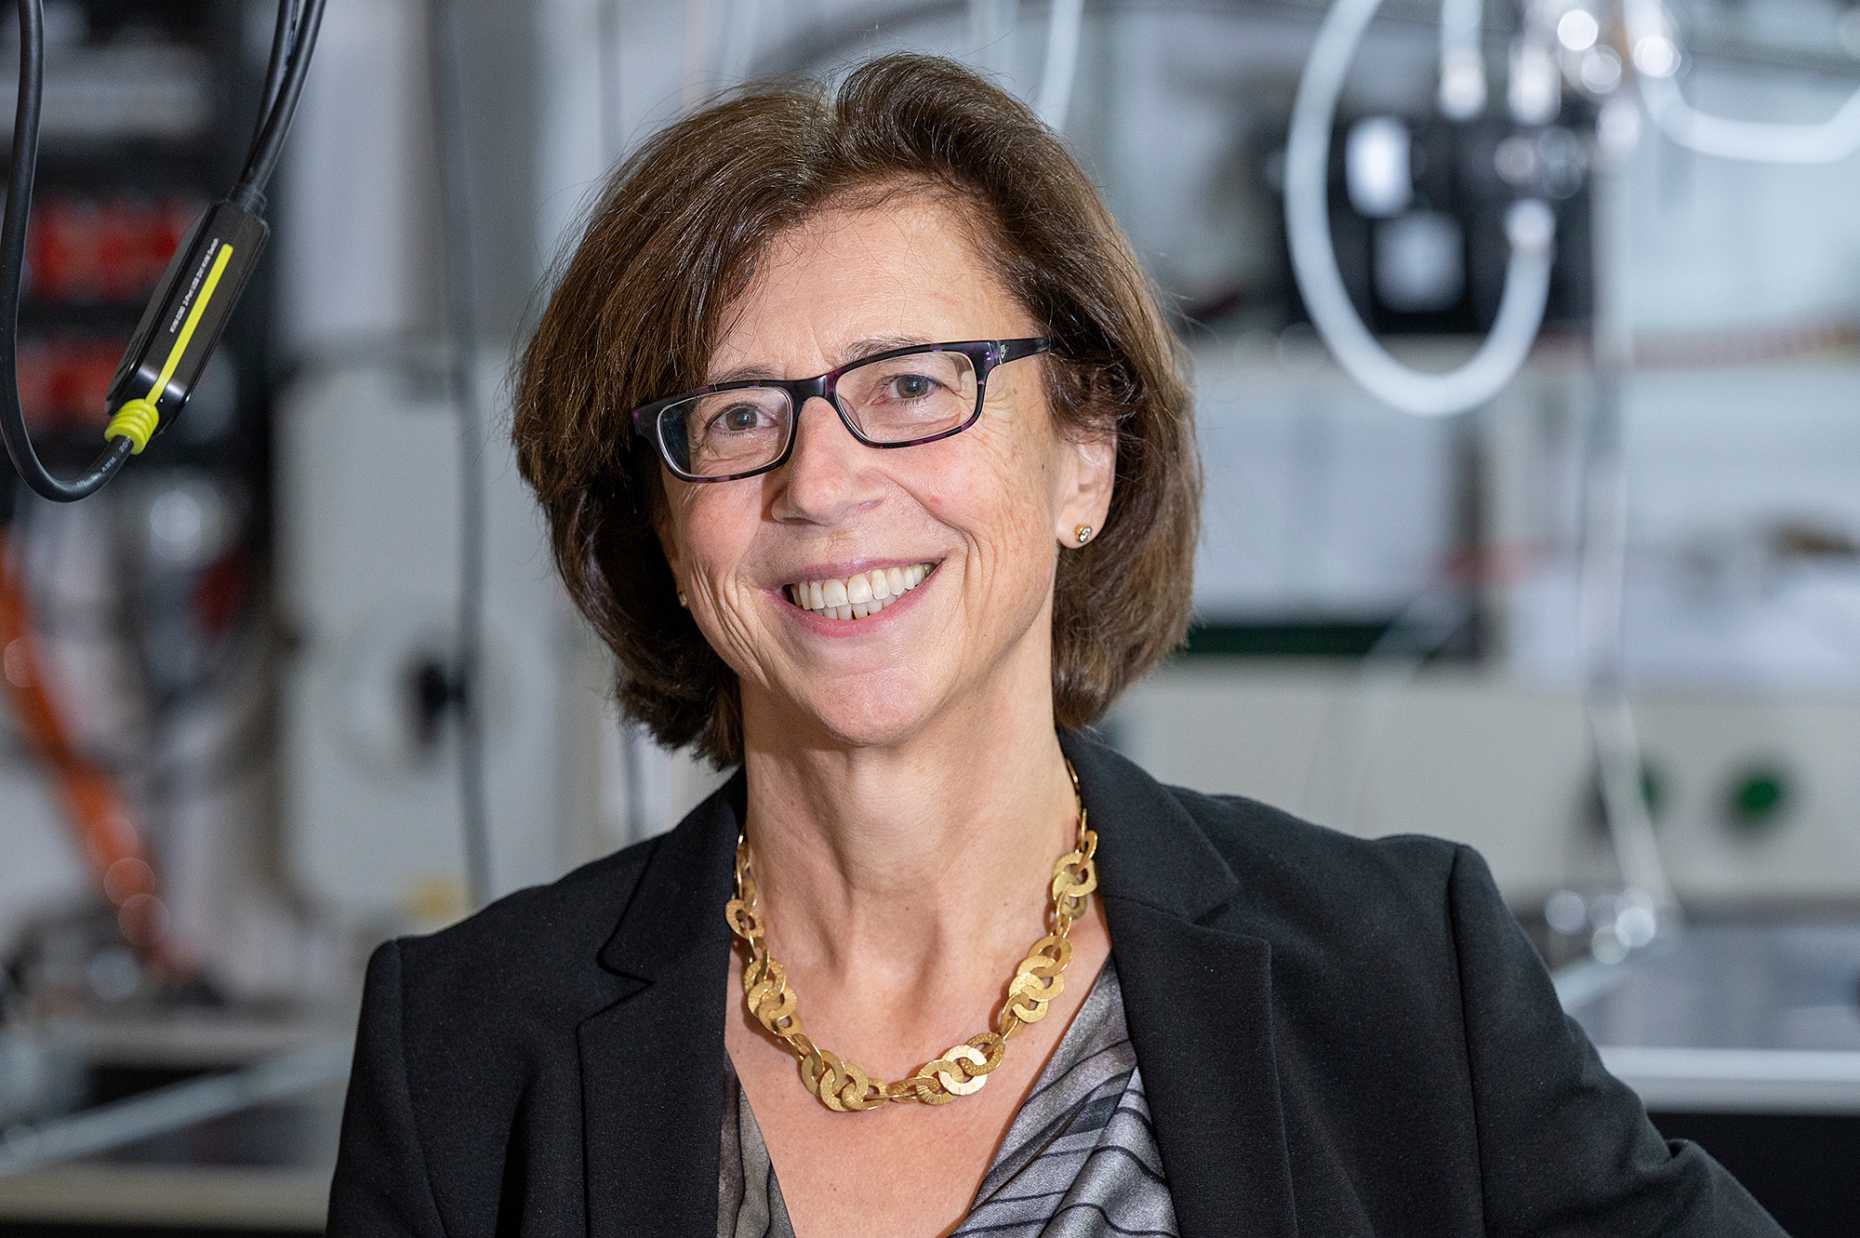 Prof. Ursula Keller